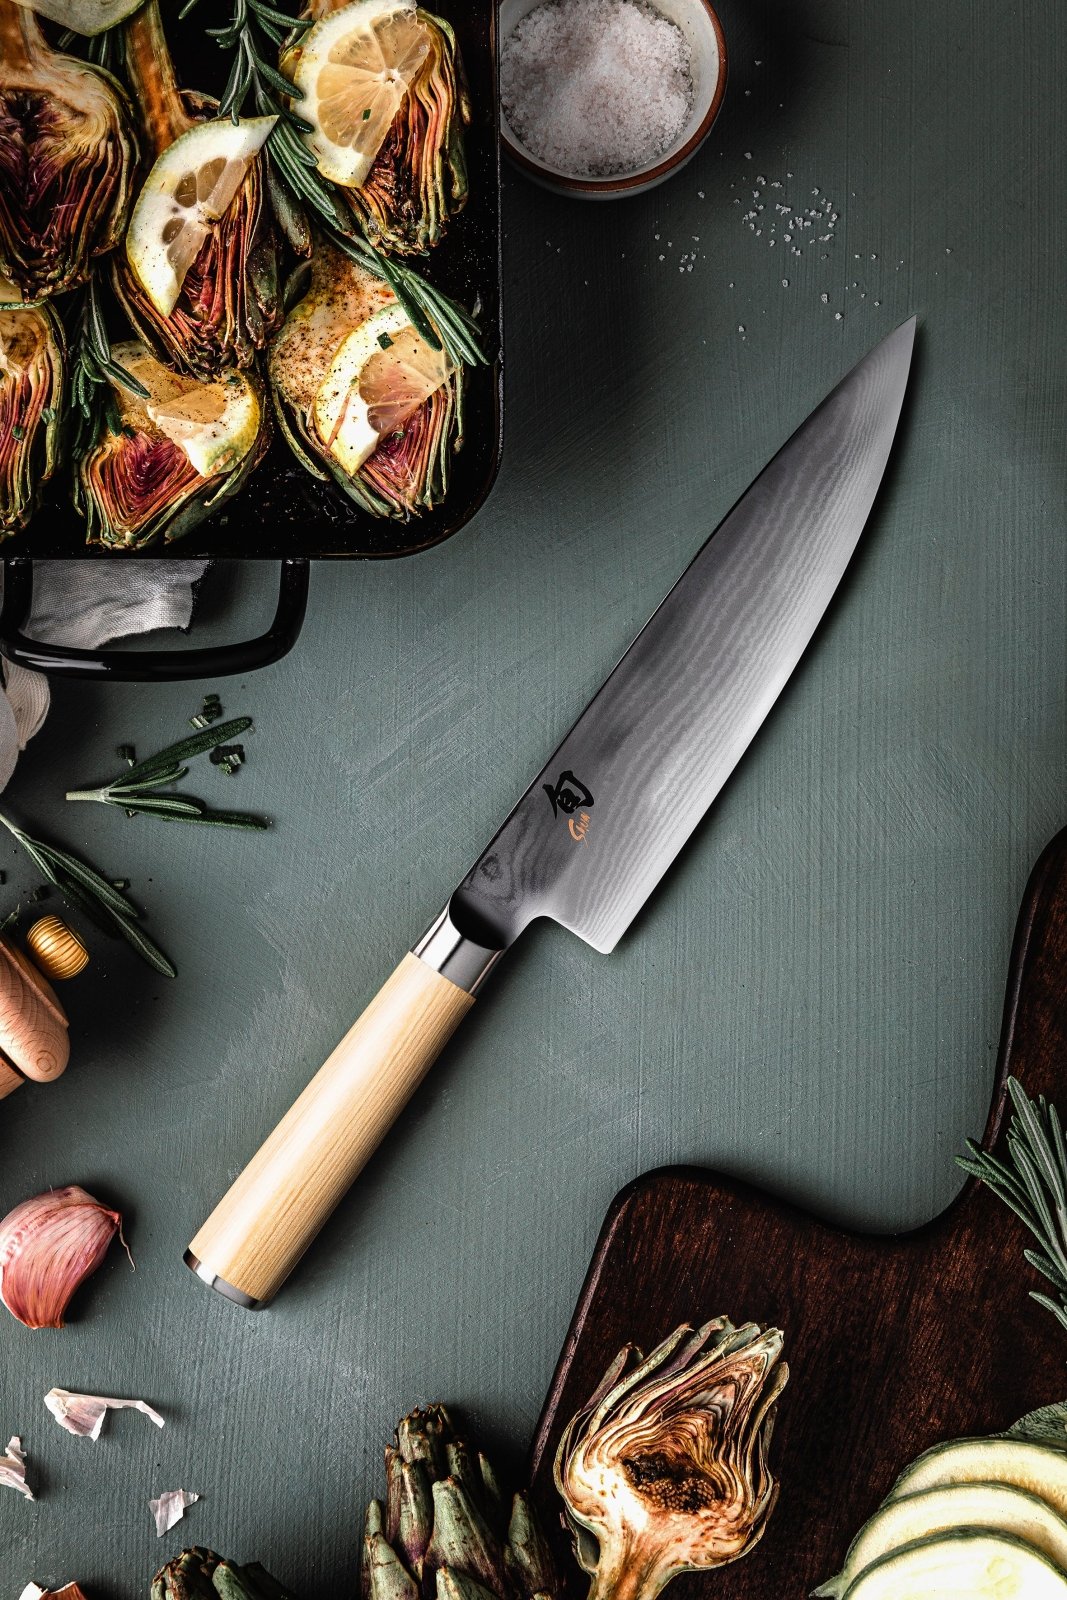 KAI Shun White 20cm Chefs Knife - KAI-DM-0706W - The Cotswold Knife Company